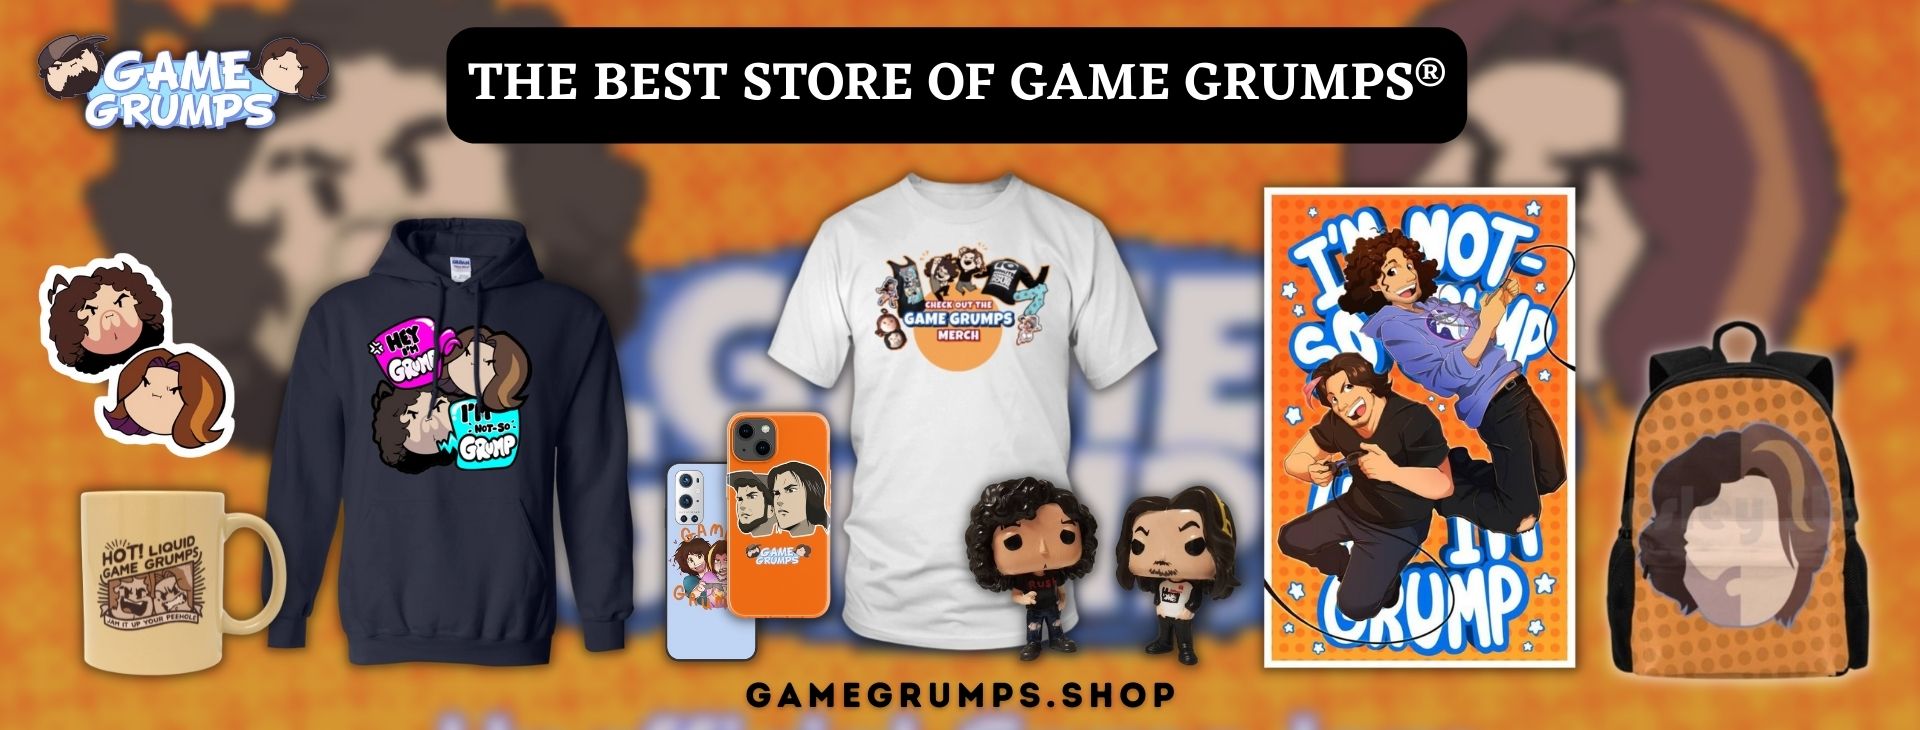 Game Grumps Banner - Game Grumps Shop